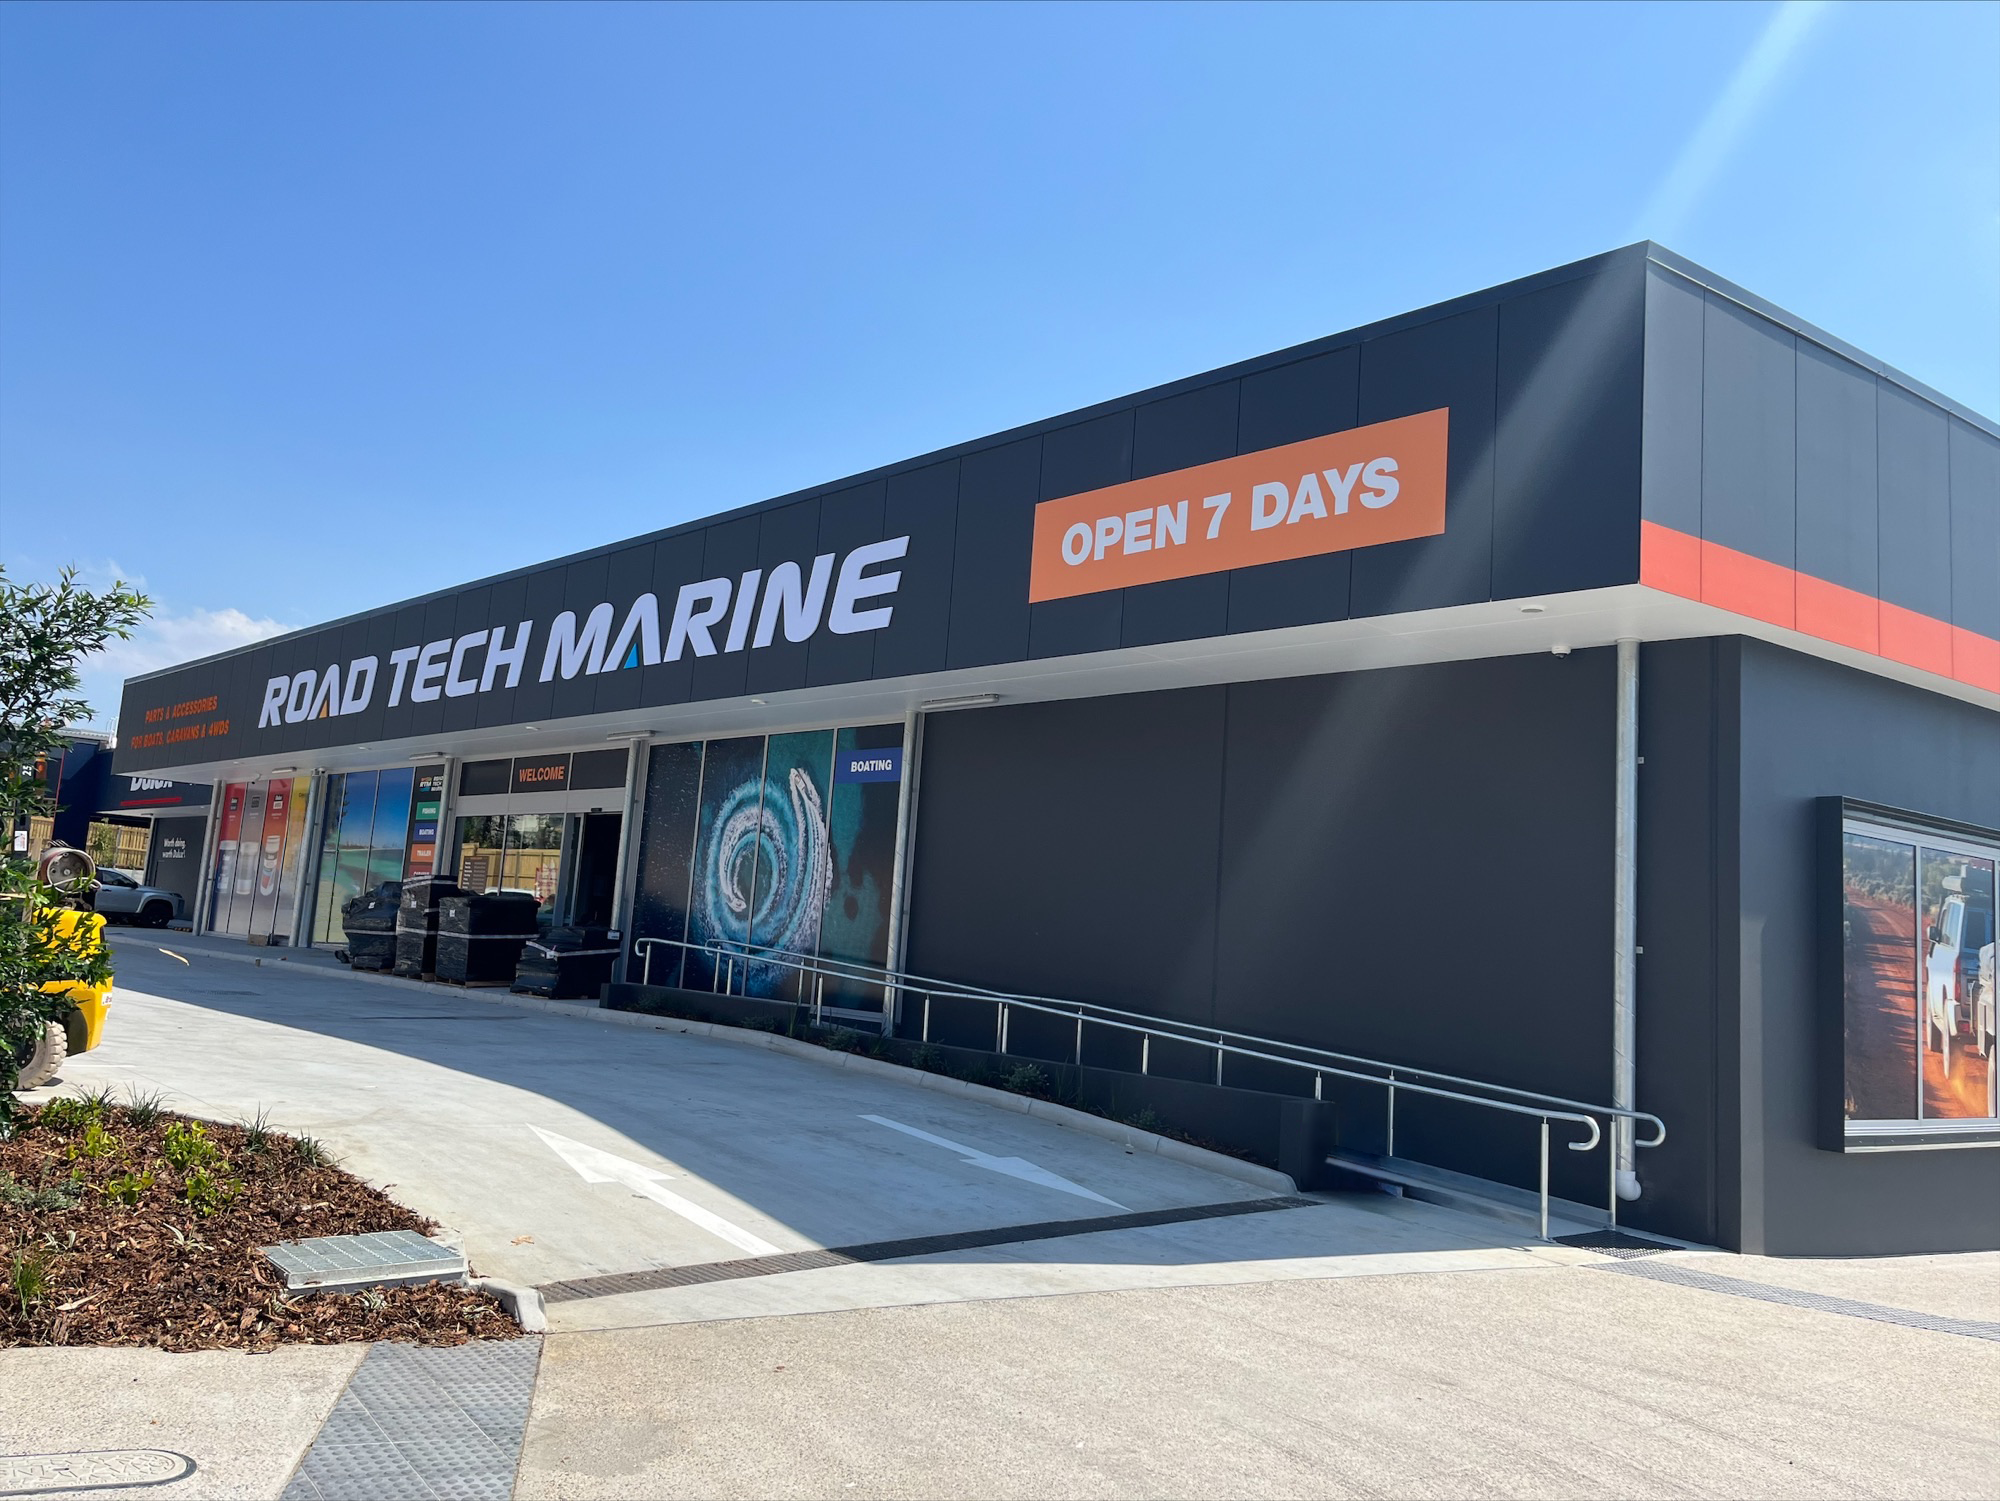 RTM - Road Tech Marine Aspley Brisbane